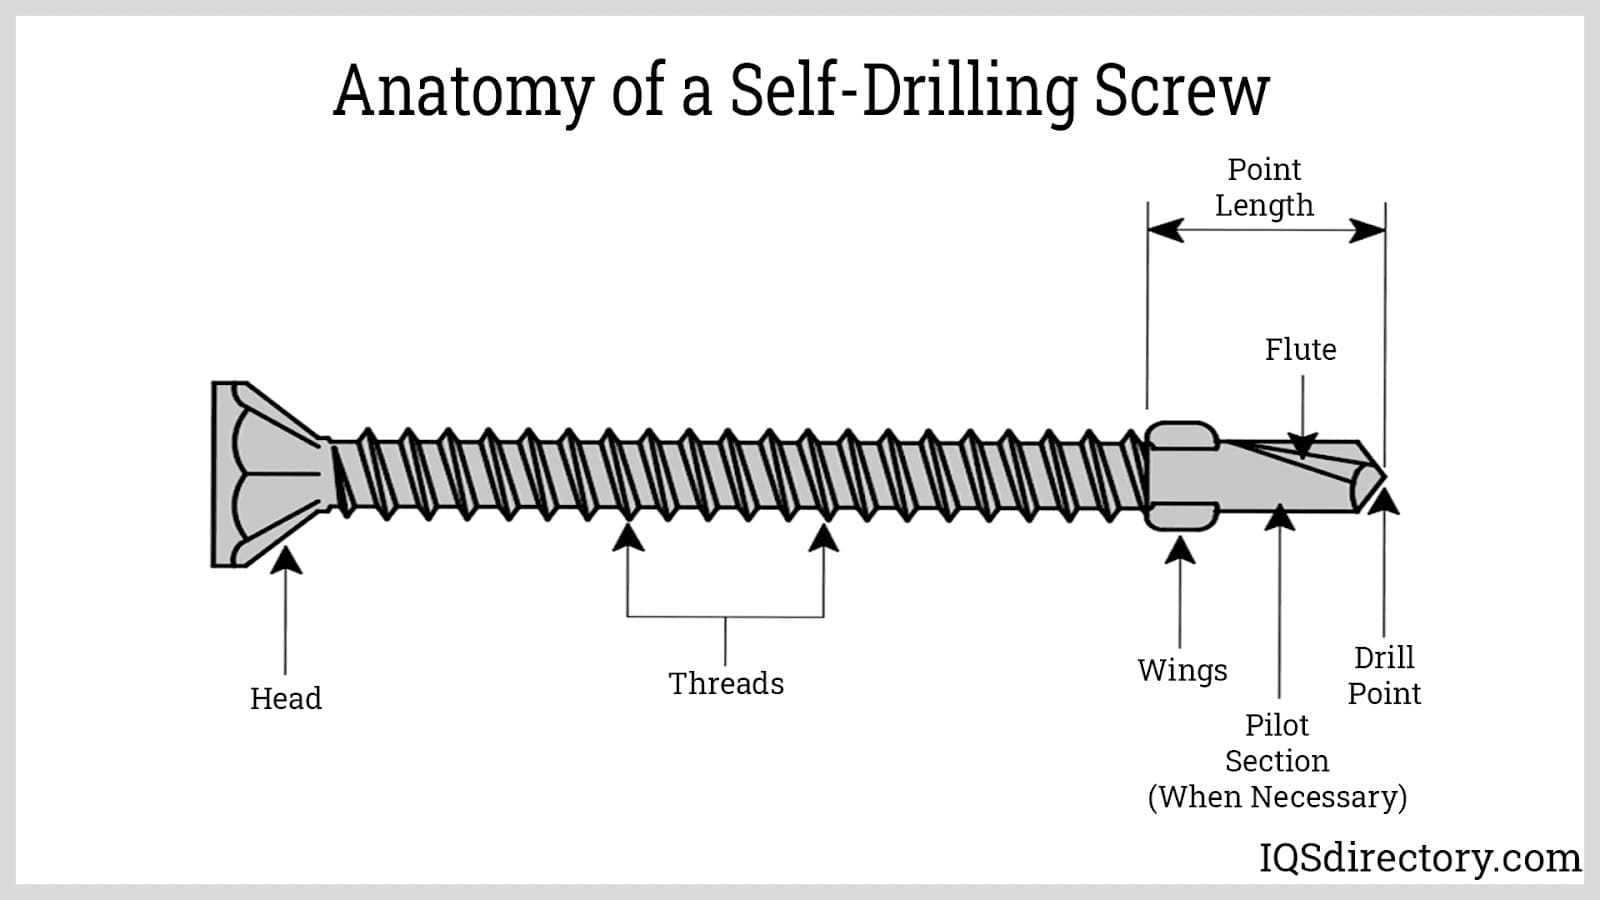 Anatomy of a Self-Drilling Screw